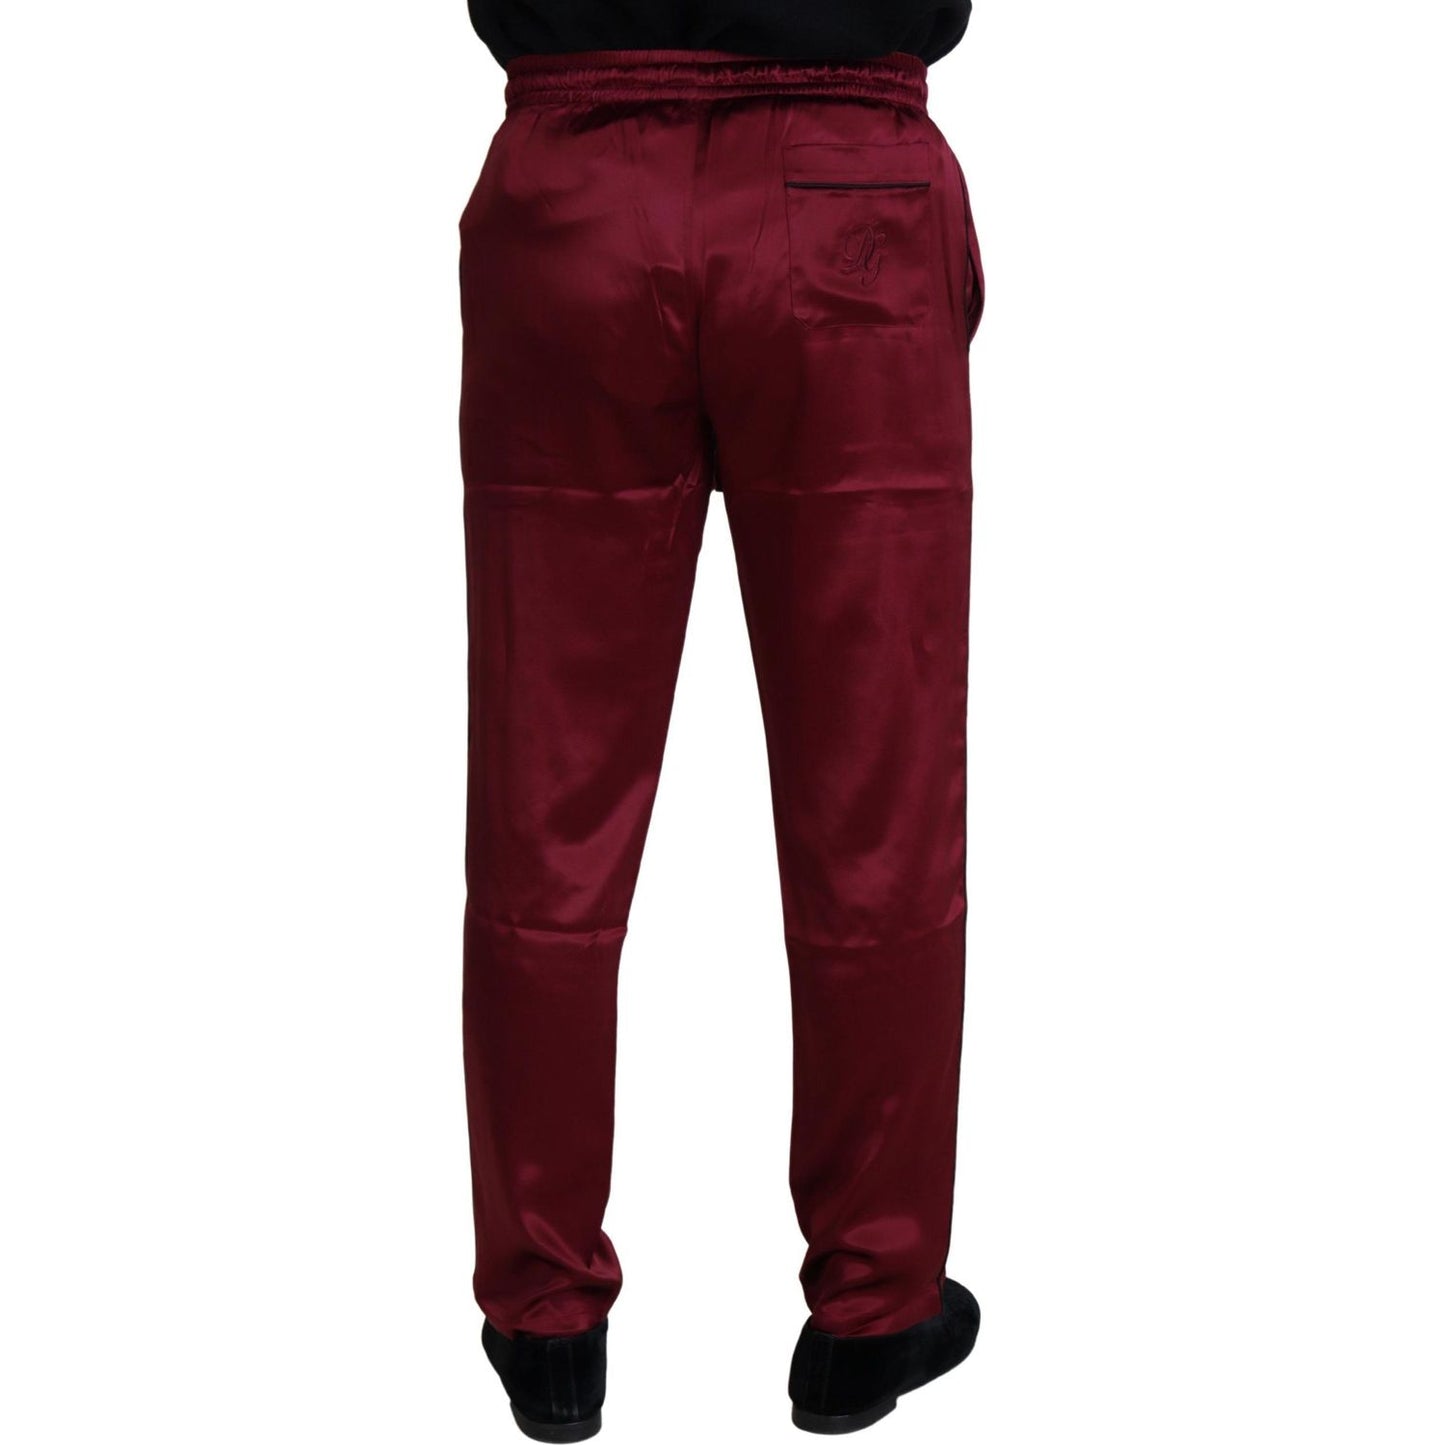 Dolce & Gabbana Silk Lounge Pants in Bordeaux bordeaux-silk-dg-sleep-lounge-pants Jeans & Pants IMG_7181-1-scaled-b3ab2595-098.jpg